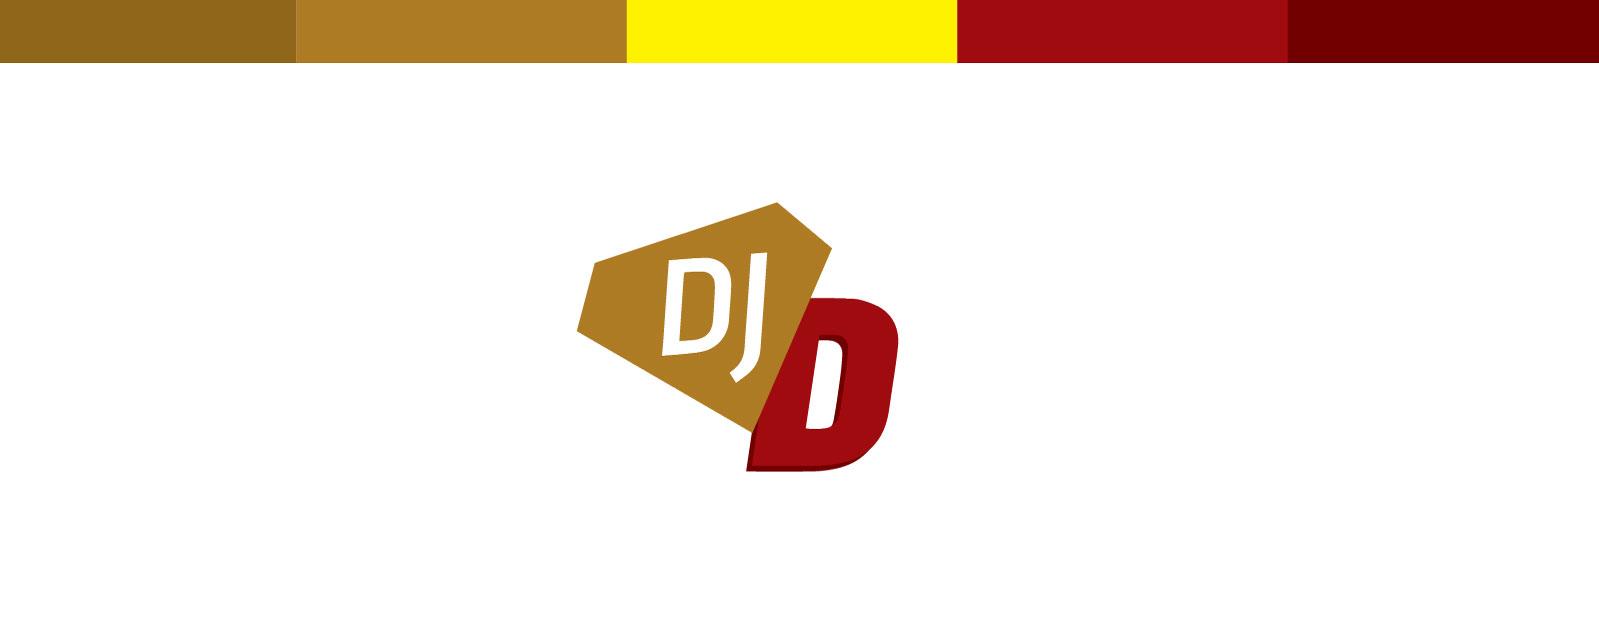 What's the 3 Diamond Logo - DJ-Diamond-Logo-3 | Wit Design Kenya